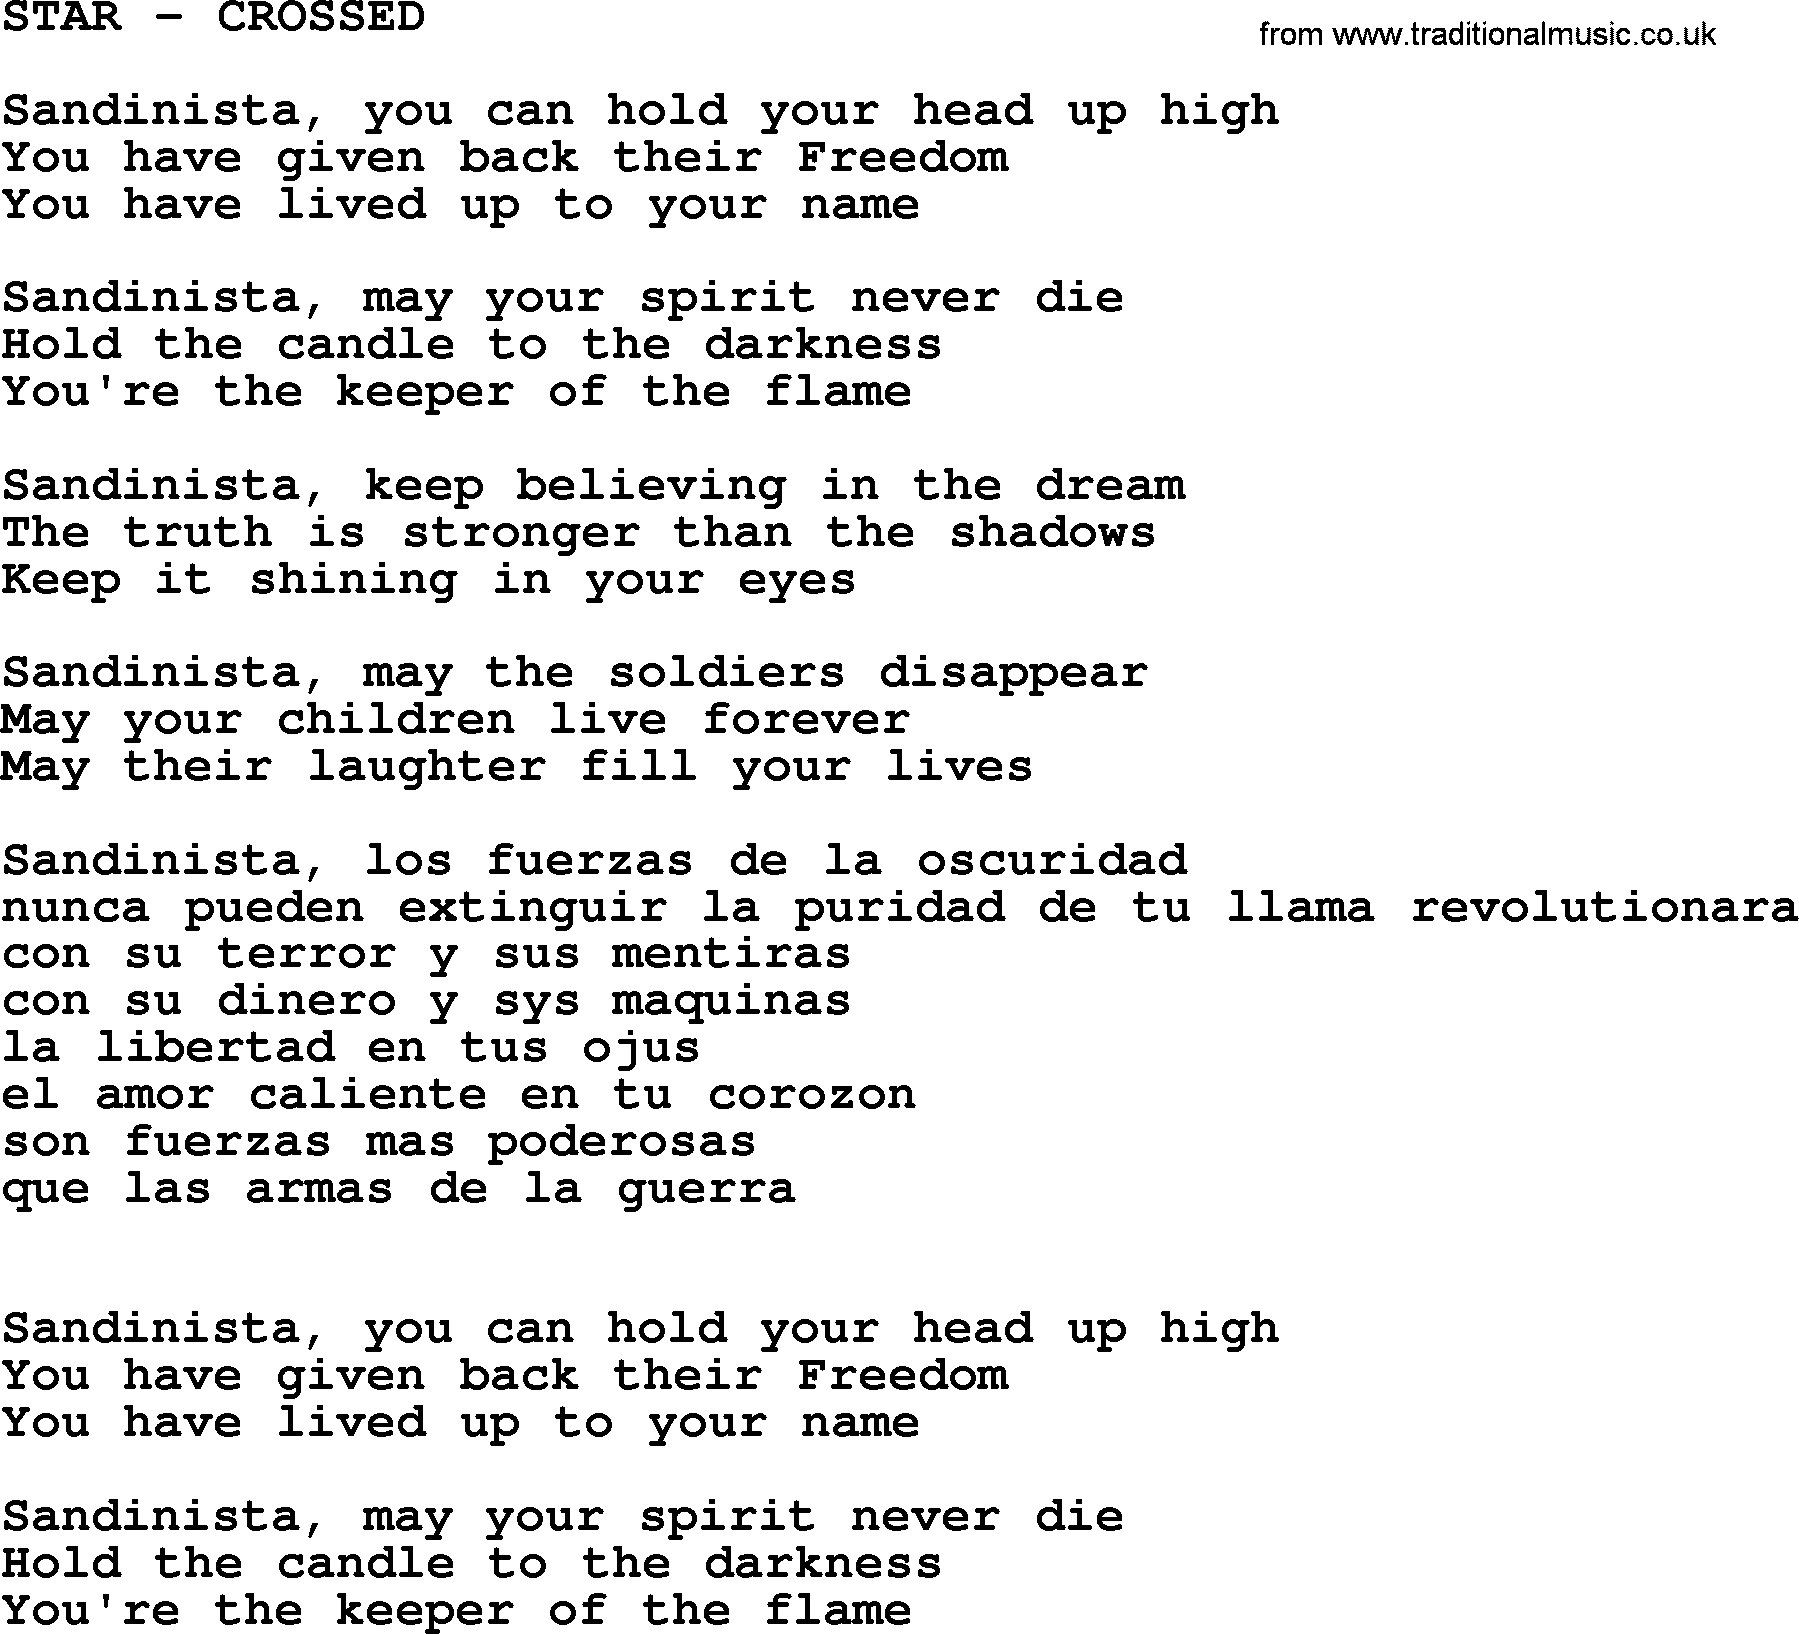 Kris Kristofferson song: Star - Crossed lyrics